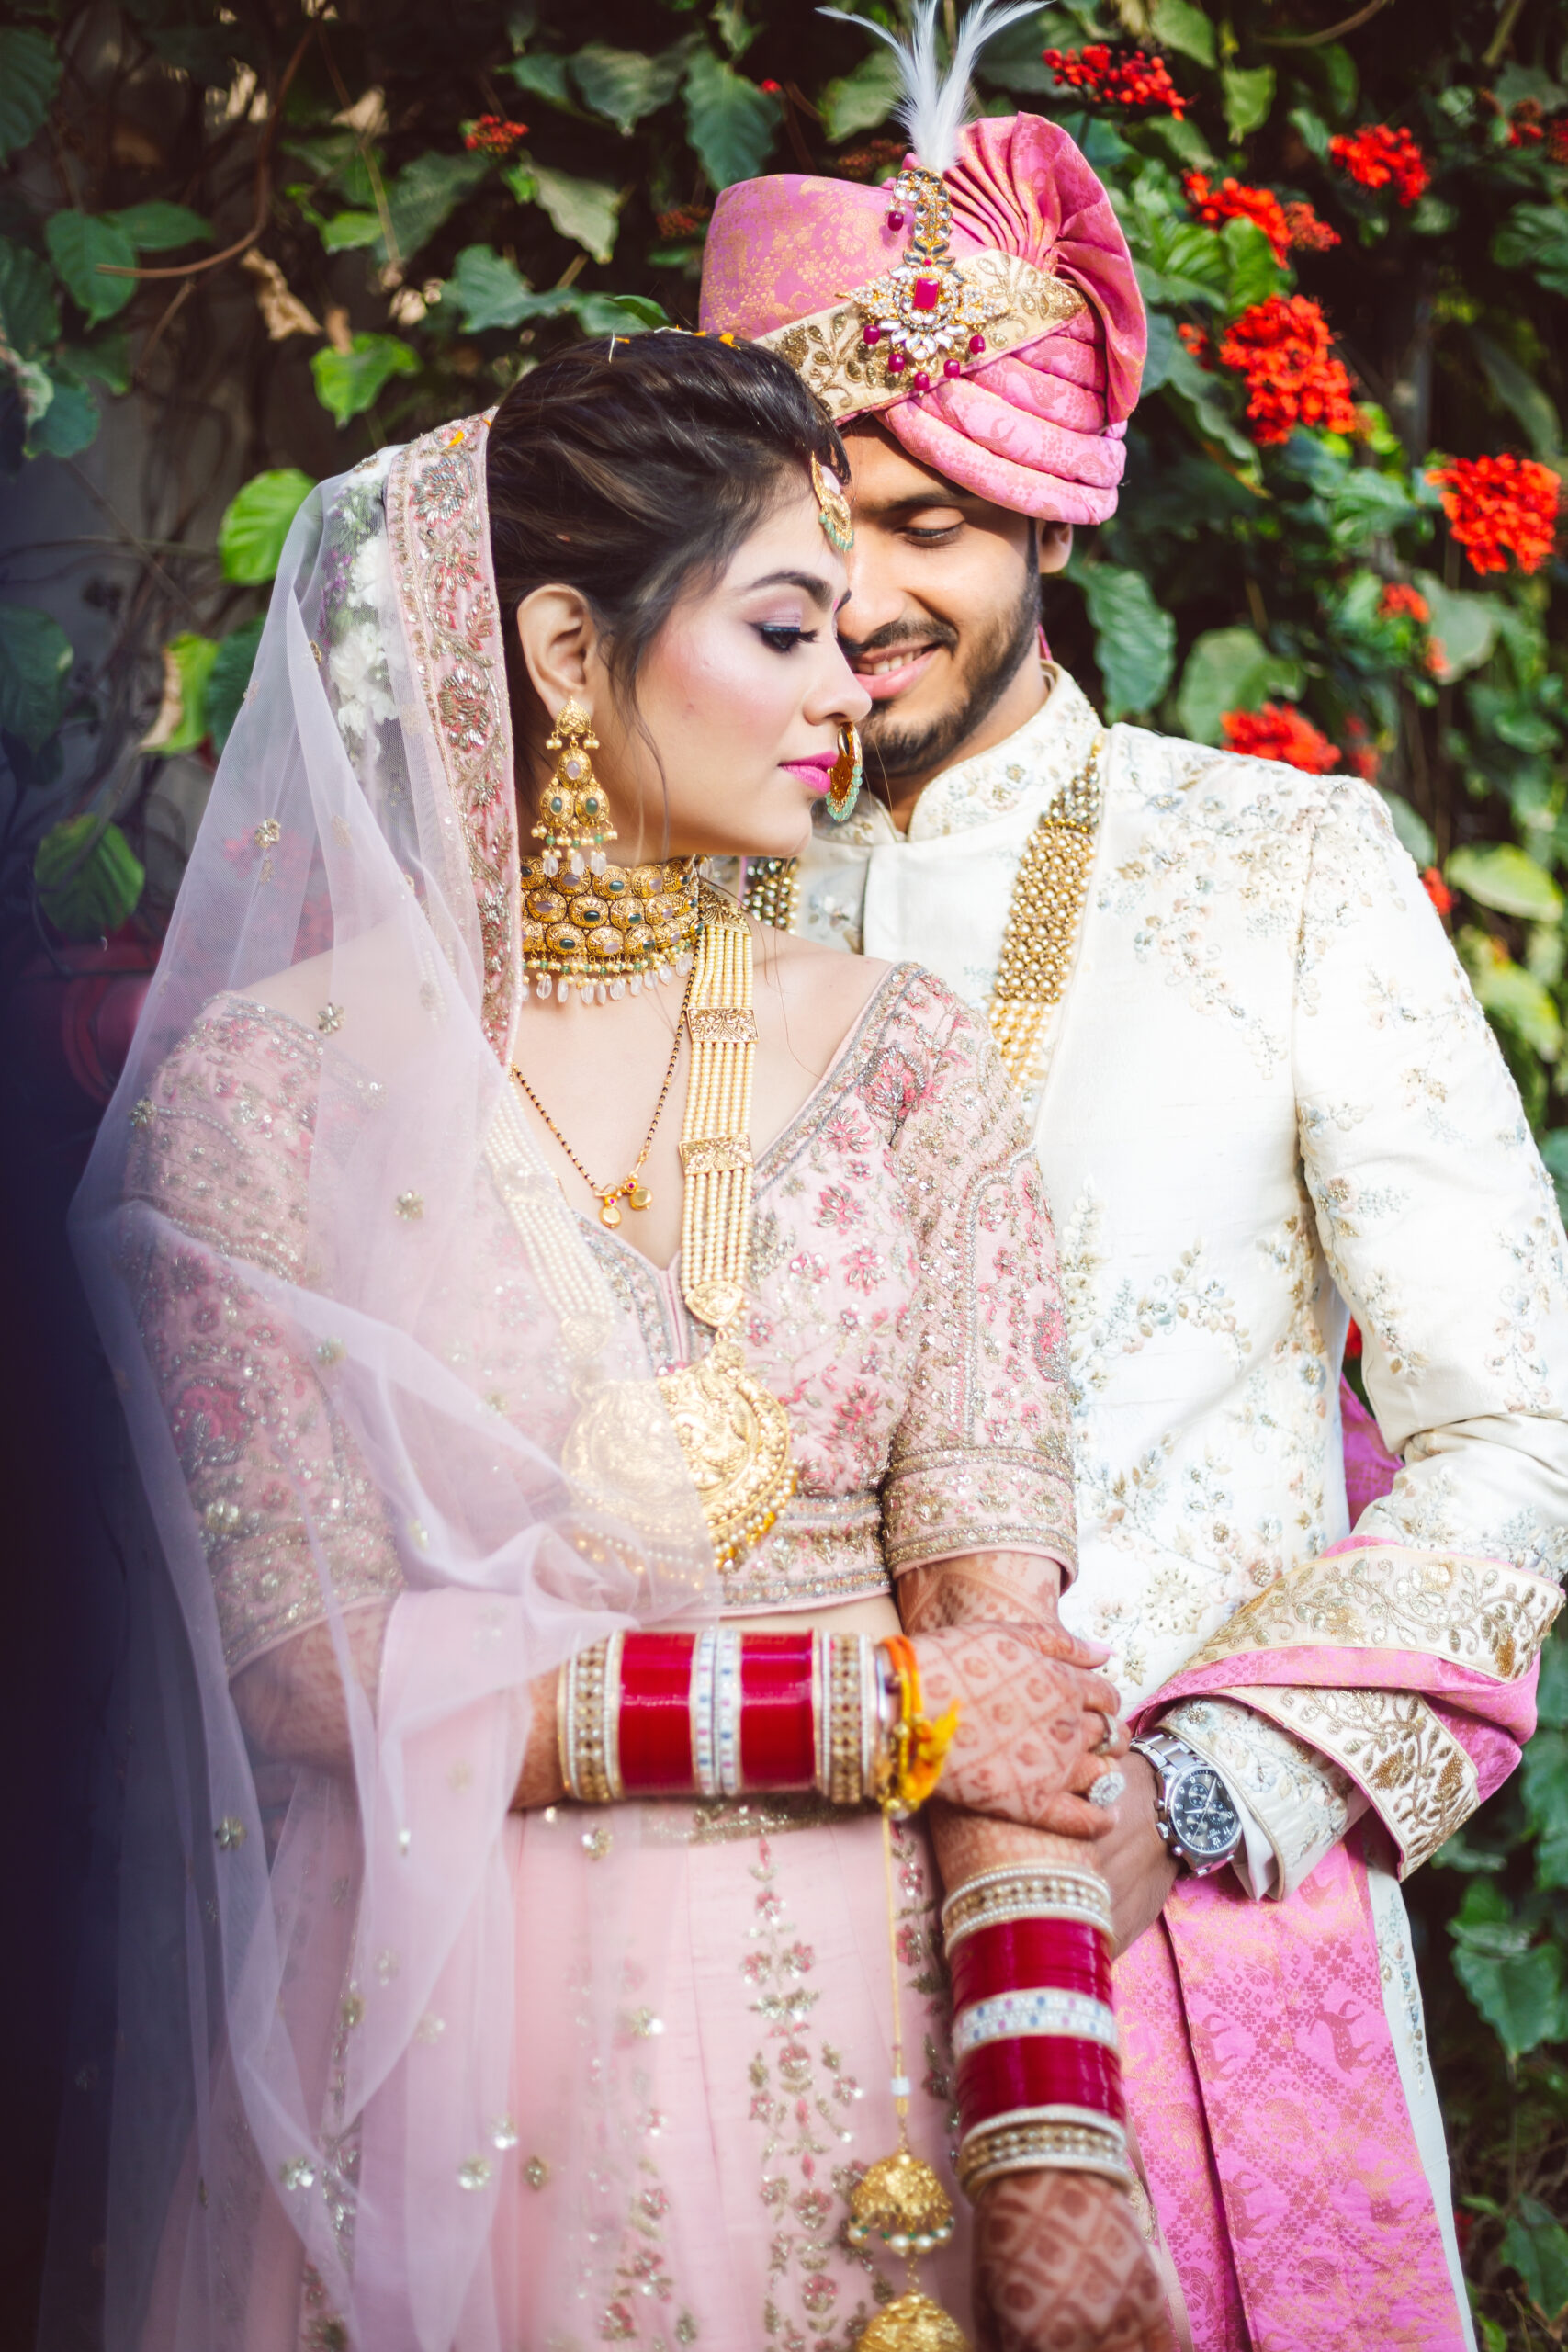 Saurav Kumar on LinkedIn: #weddingphotography #weddingphotographer  #weddingday #candidphotography…